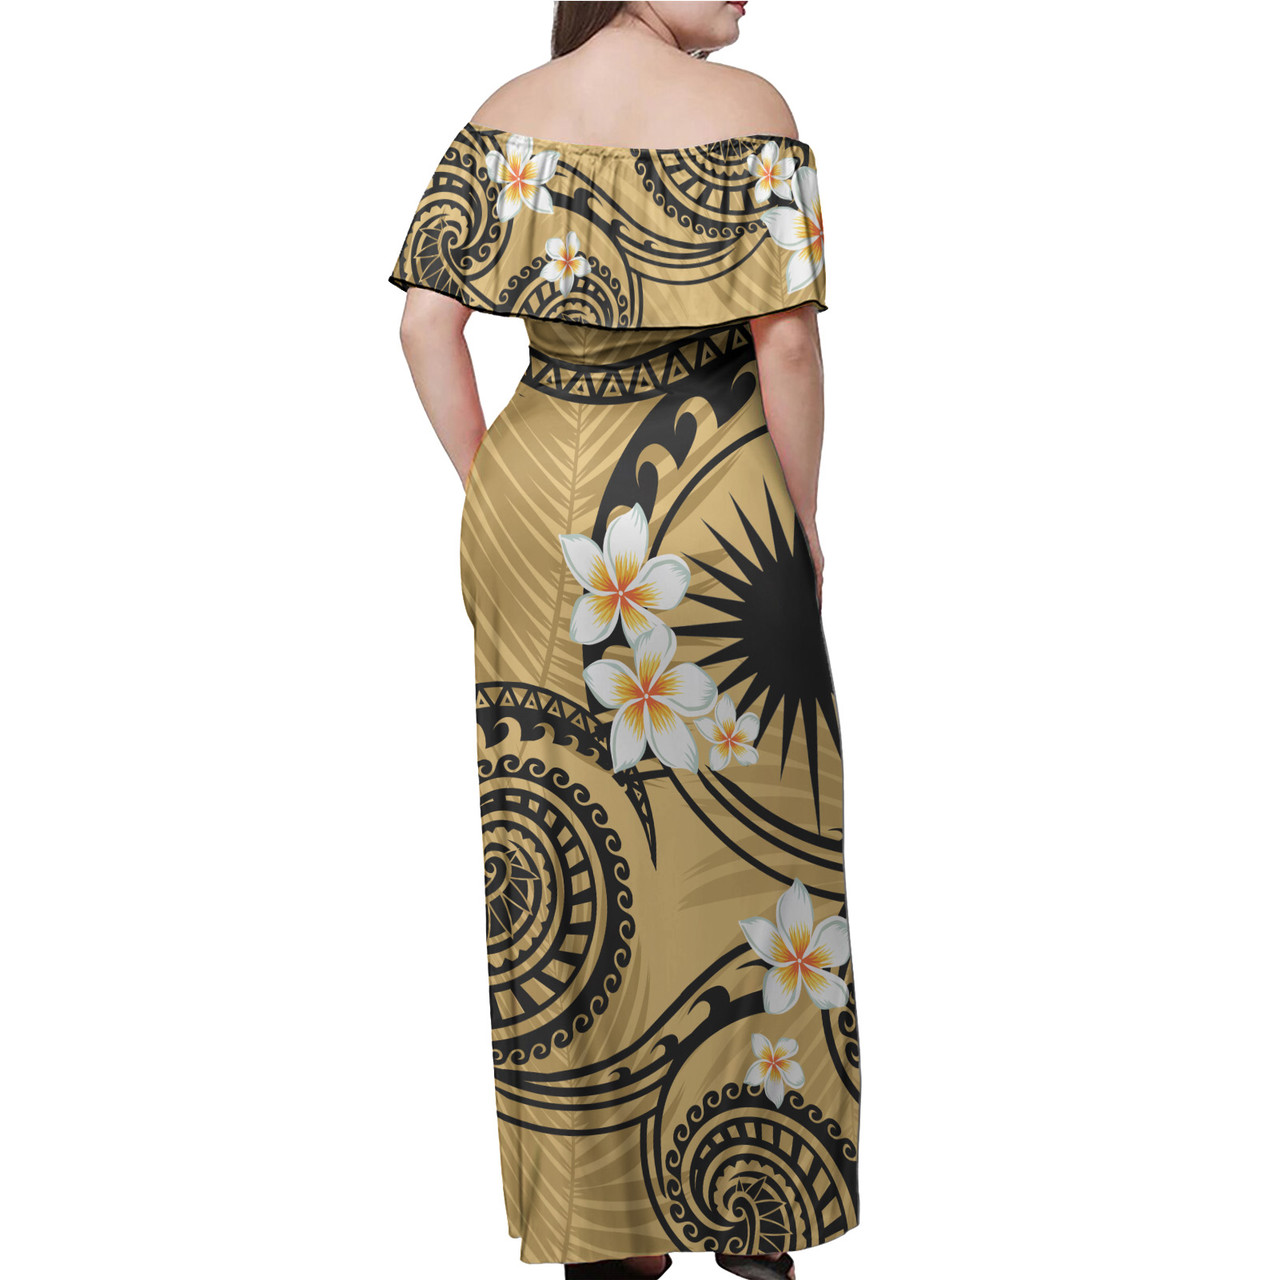 Marshall Islands Off Shoulder Long Dress Plumeria Flowers Tribal Motif Yellow Version